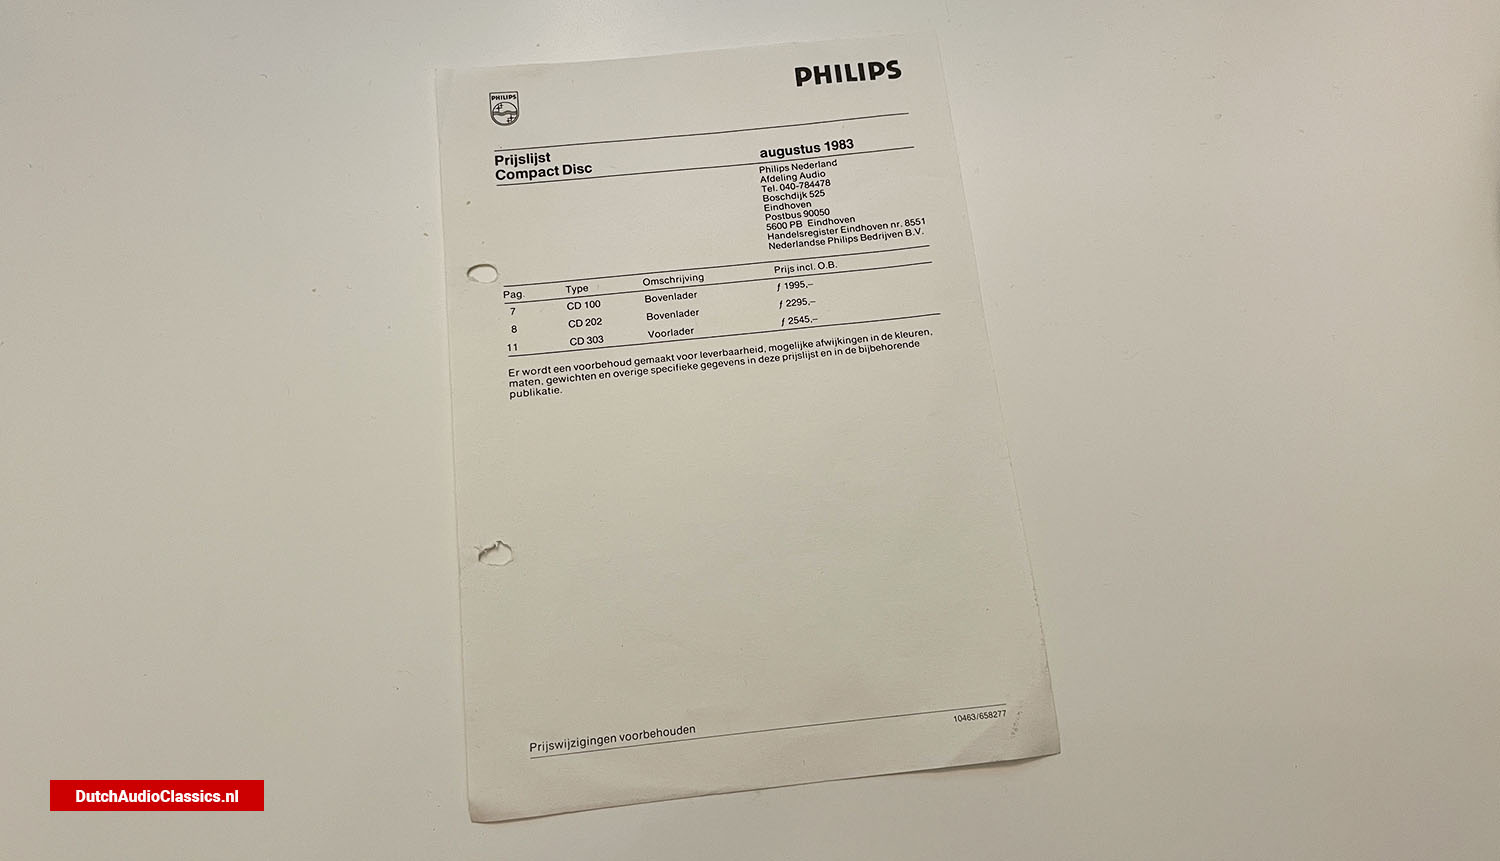 Pricelist Philips cd100 cd200 cd300 August 1983